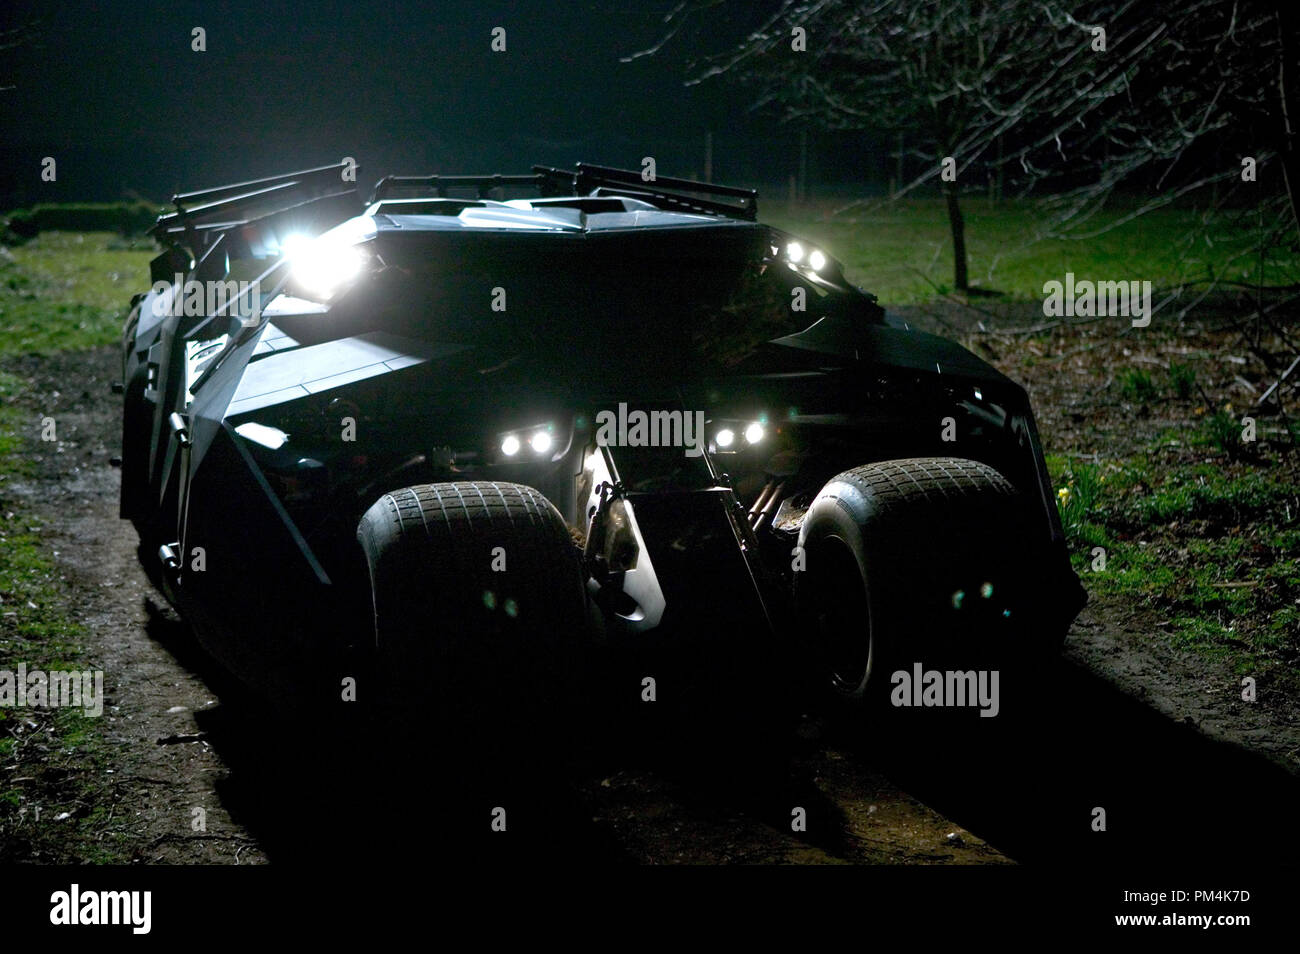 https://c8.alamy.com/comp/PM4K7D/batman-begins-the-batmobile-2005-warner-brothers-photo-by-david-james-PM4K7D.jpg